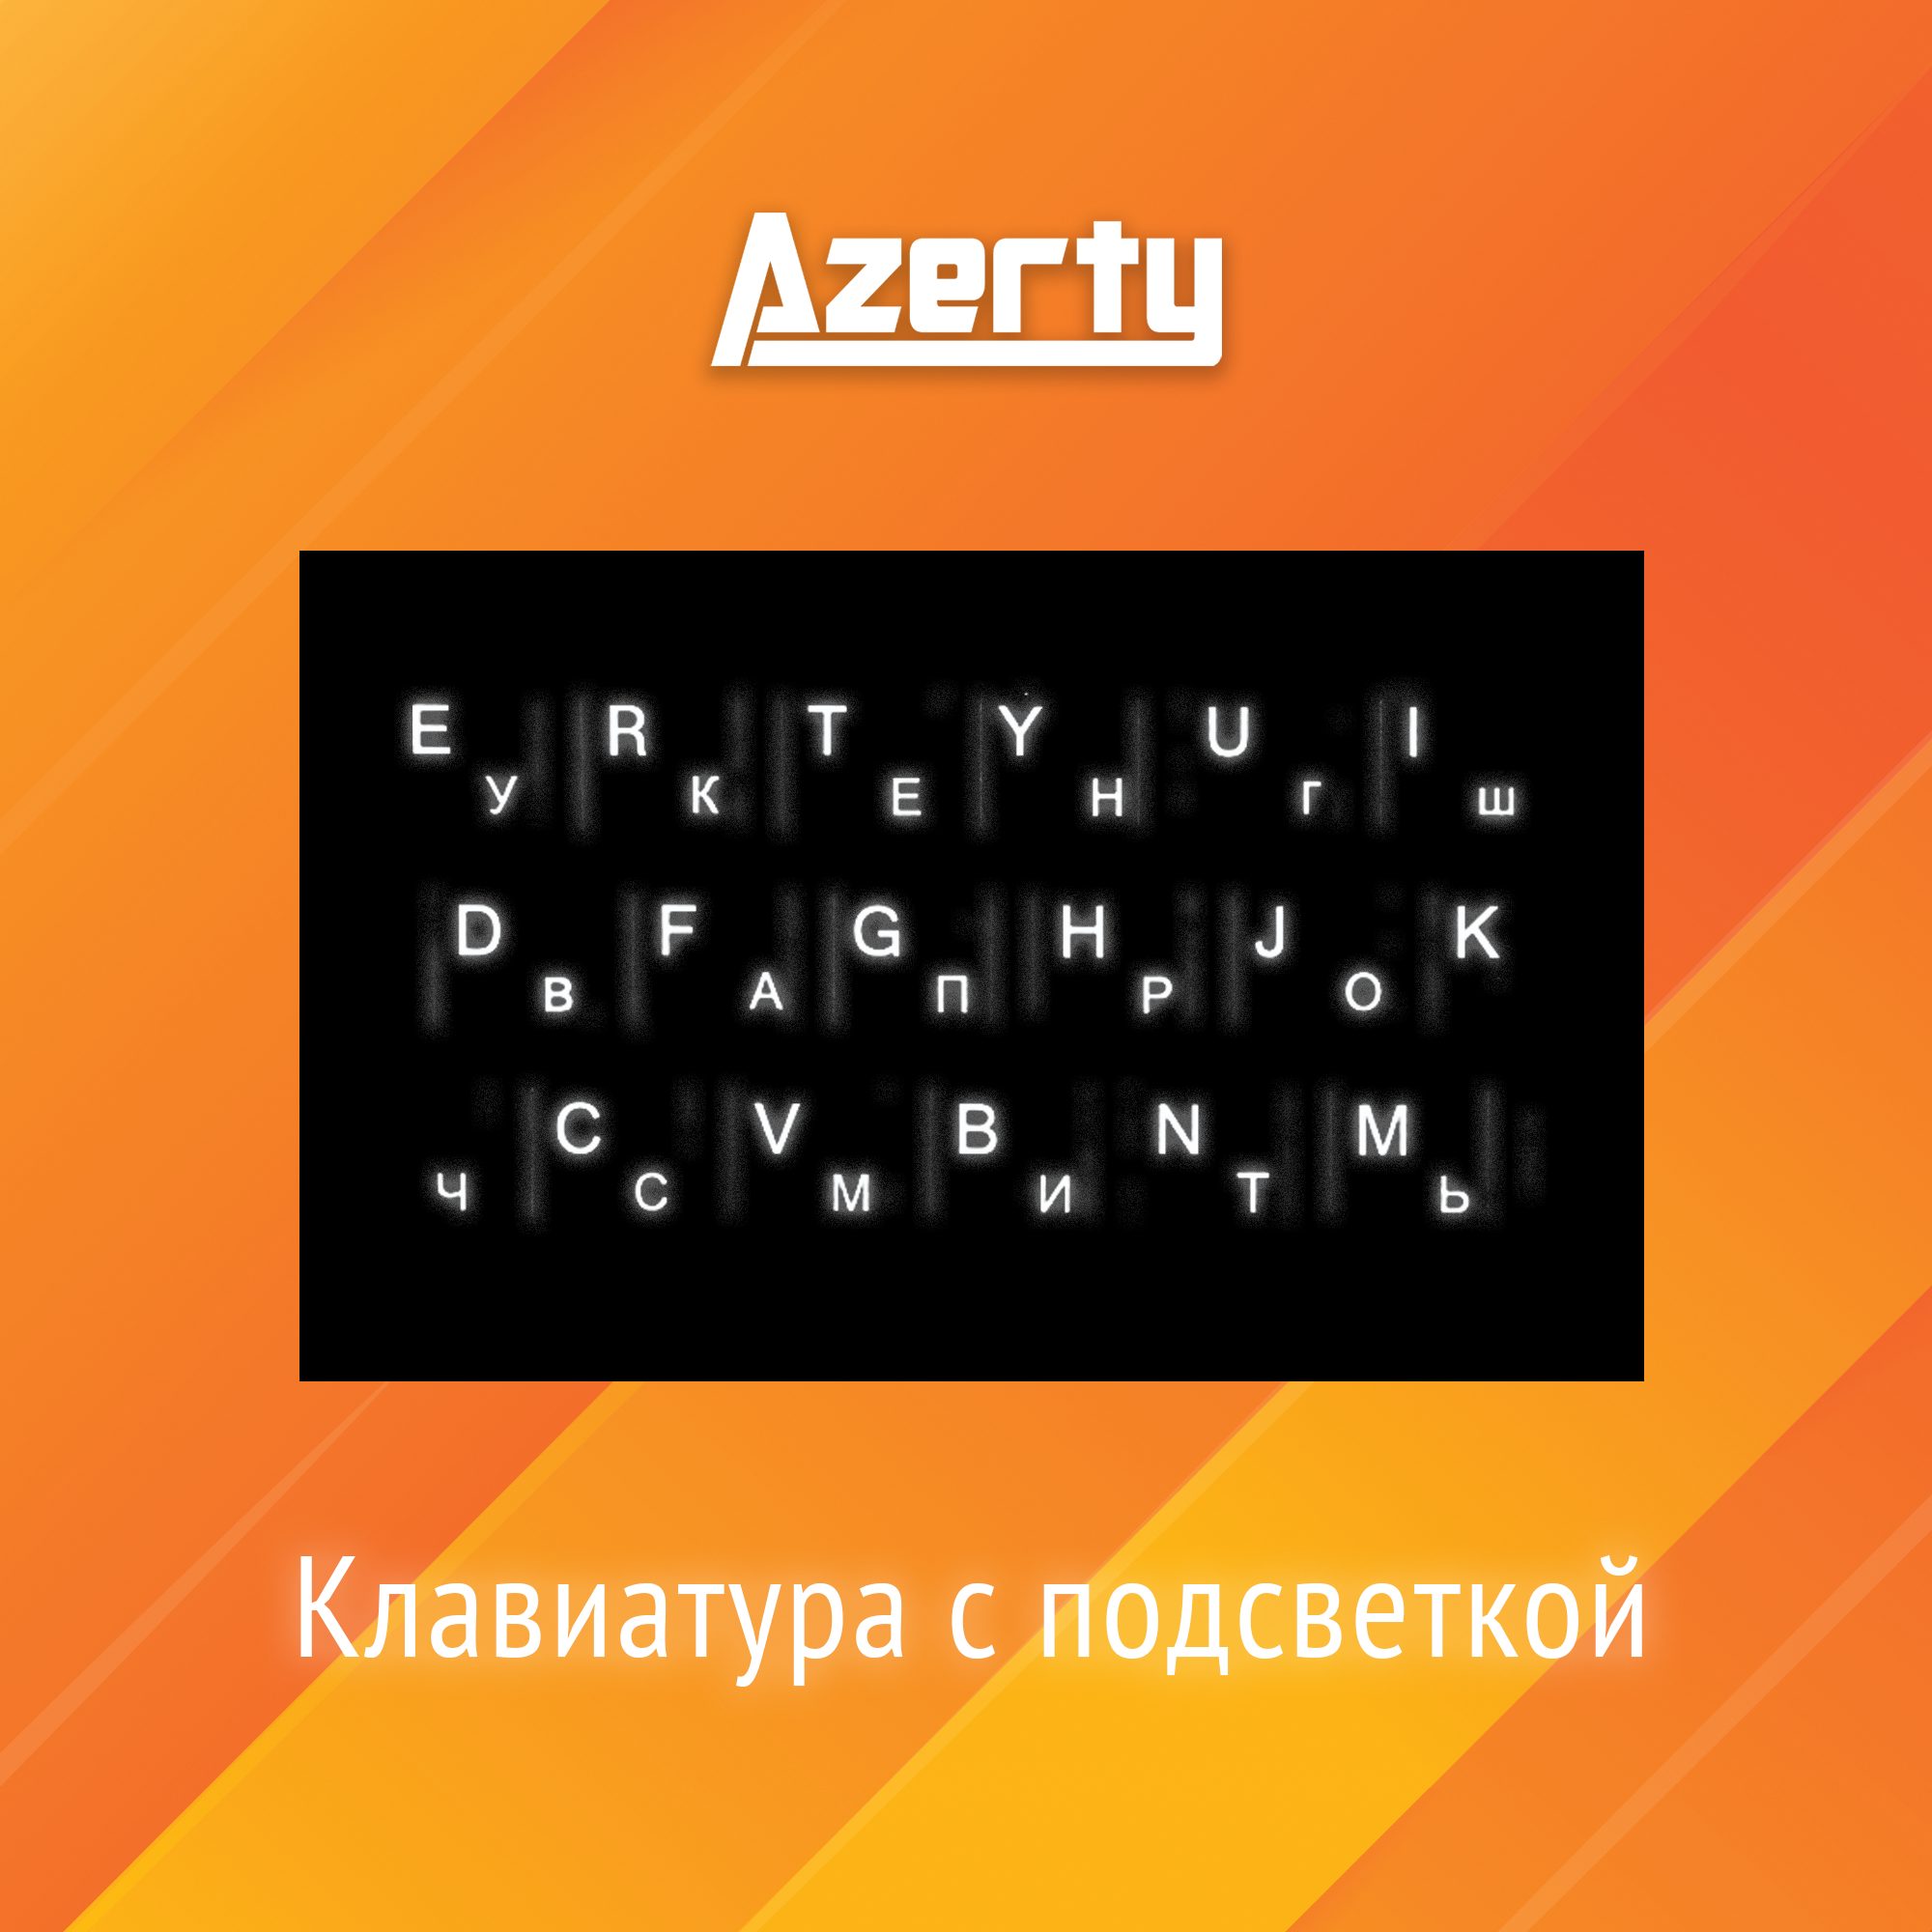 Ноутбук Azerty AZ-1505 (156" IPS 1920x1080 Intel J4125 4x20GHz 12Gb DDR4 512Gb SSD)